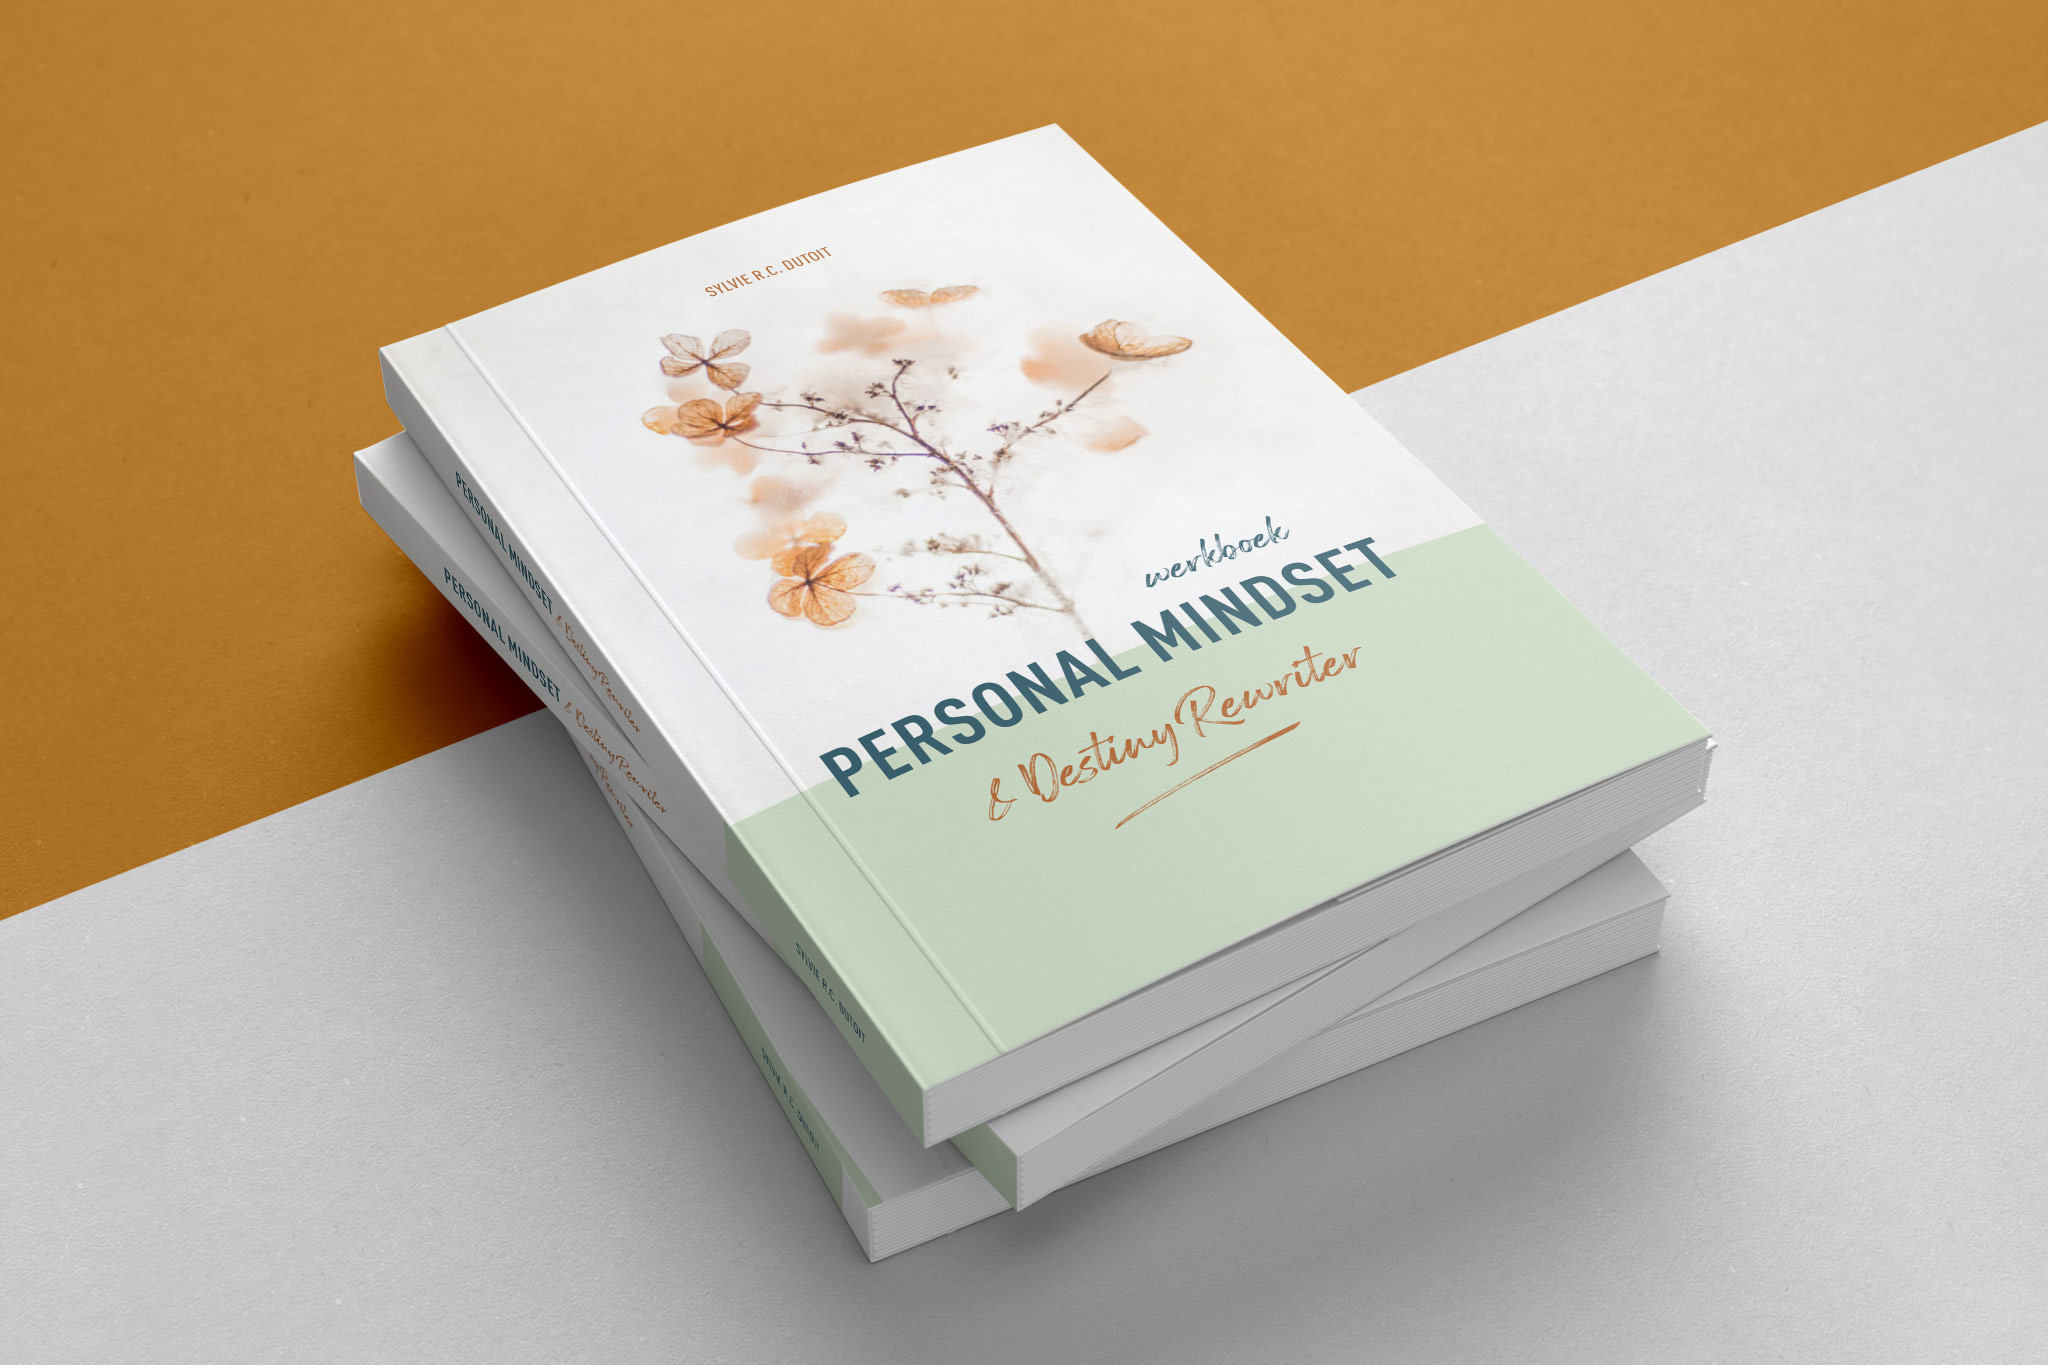 vormgeving werkboek Personal mindset & destiny rewriter